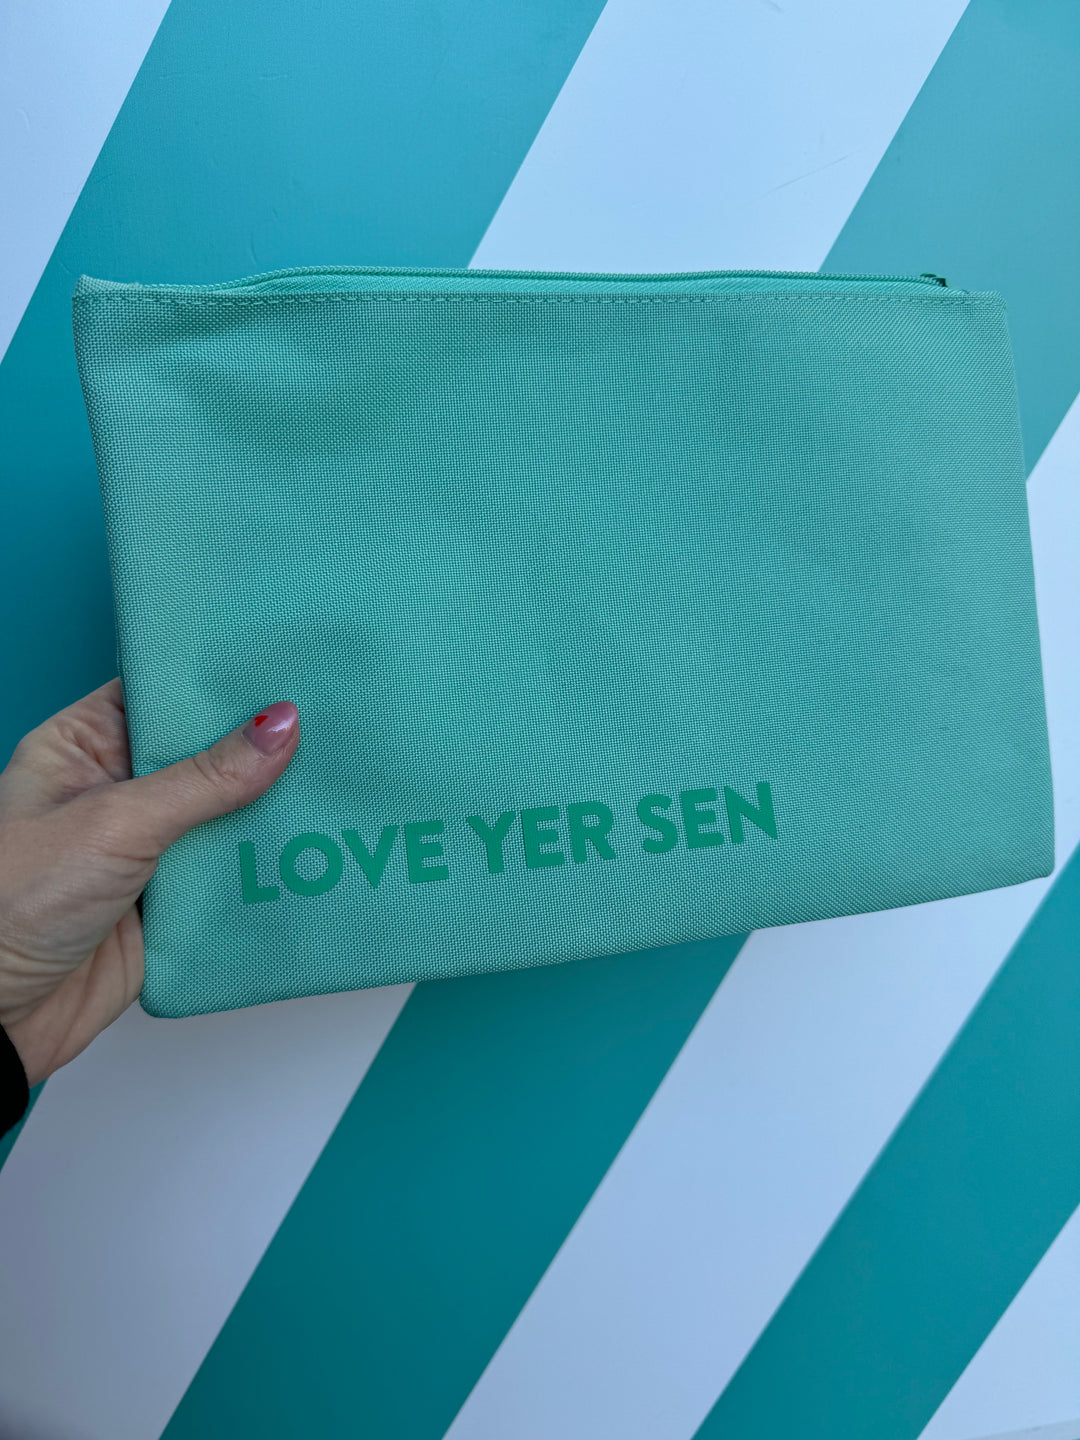 Love Yer Sen Accessory Bag